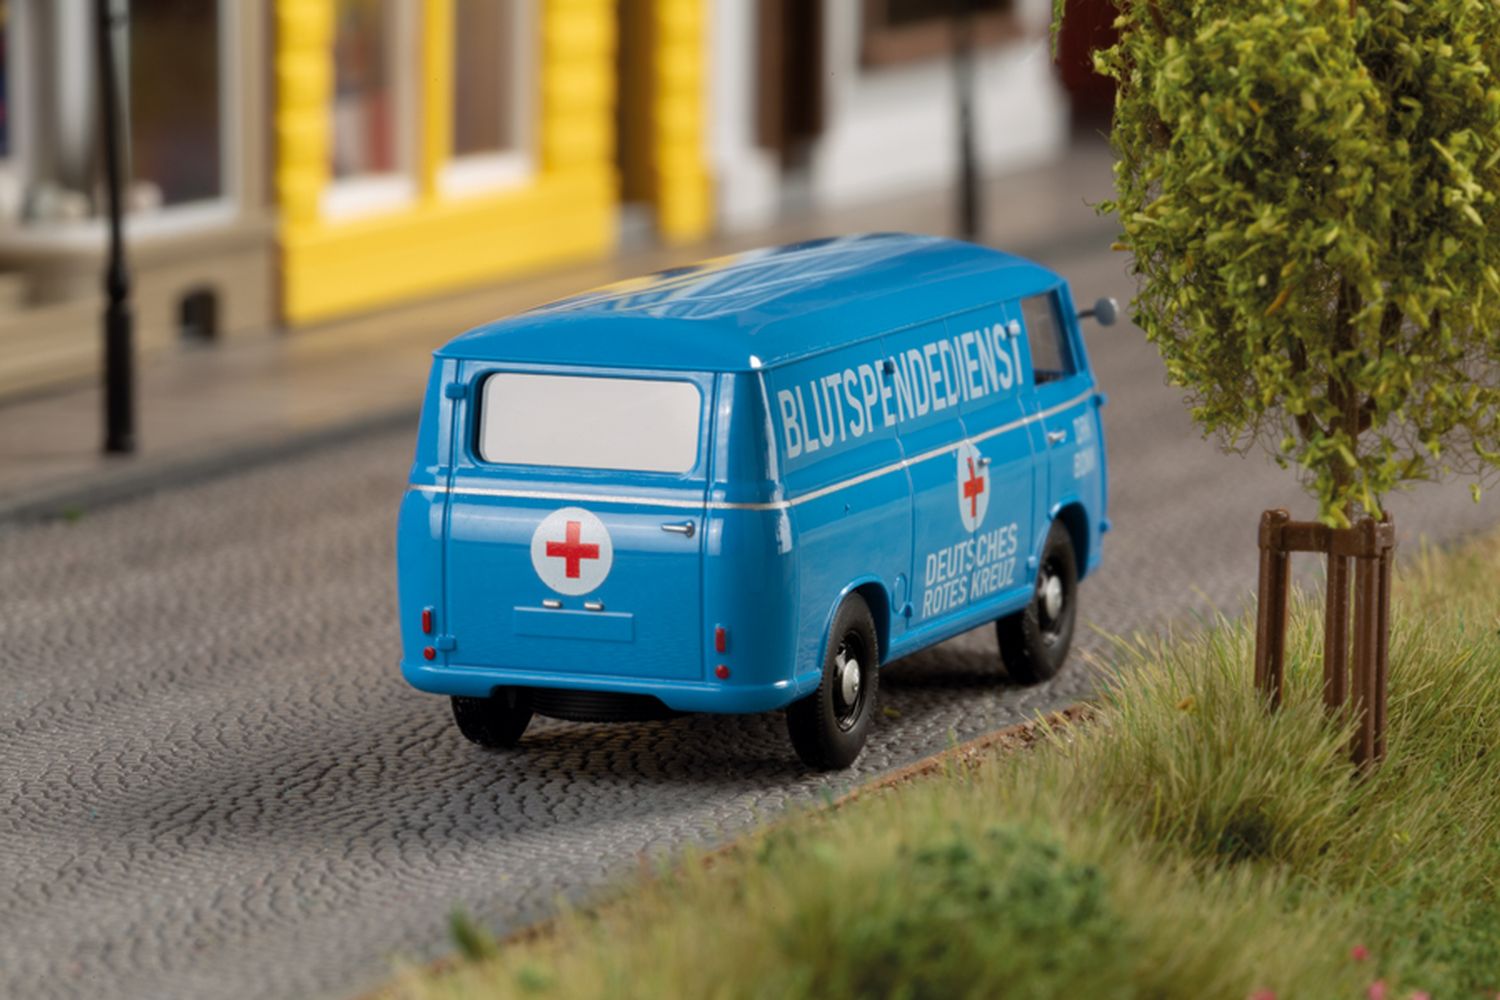 mini-car 66008 - Goliath Kastenwagen DRK-Blutspendedienst - Fertigmodell